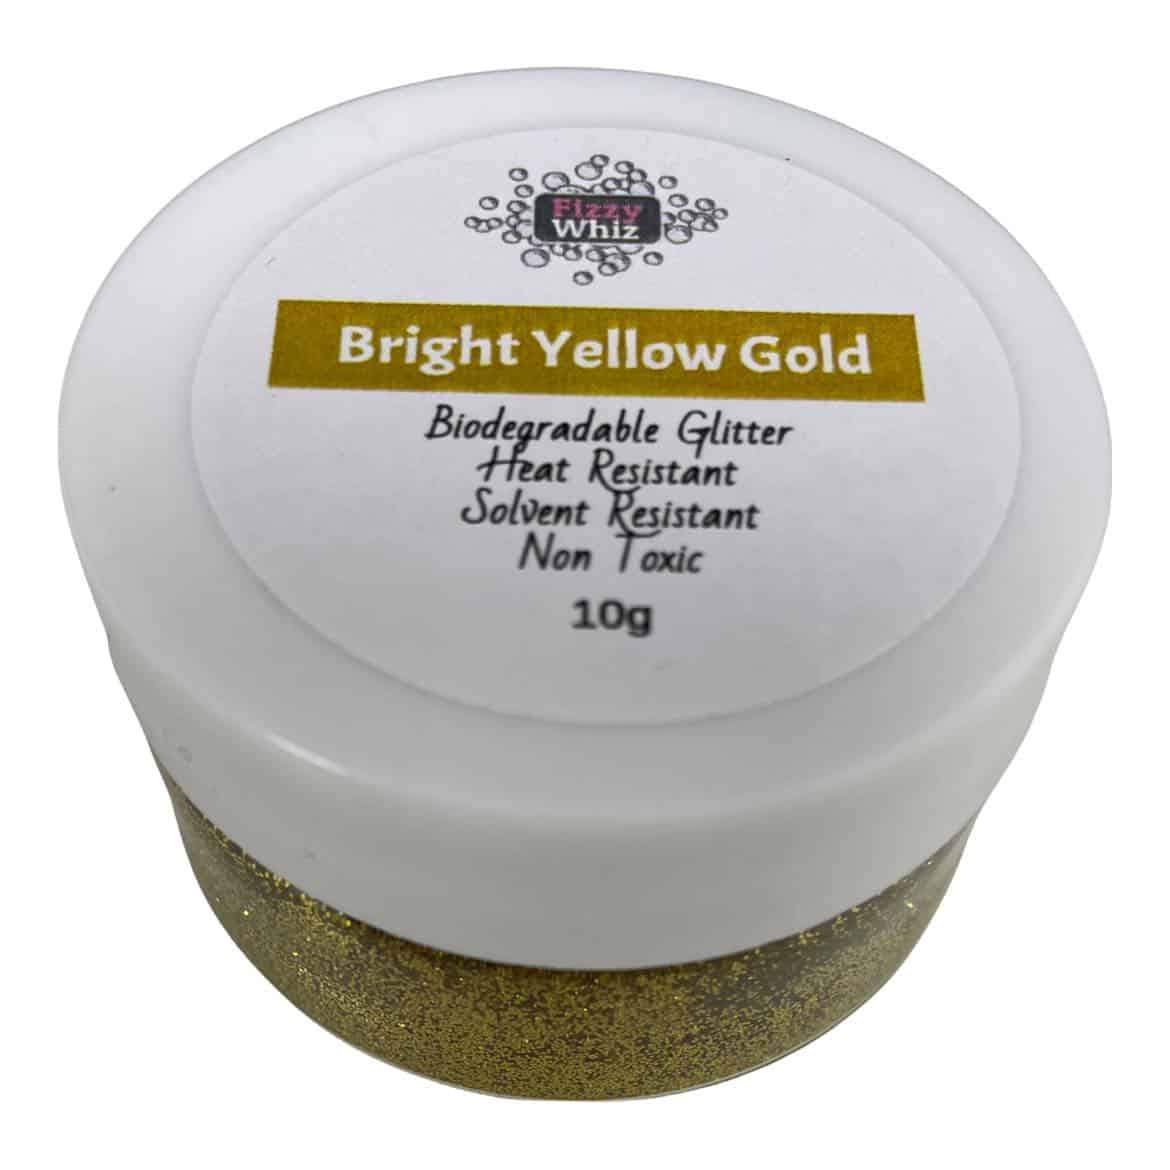 Biodegradable Bright Yellow Gold Glitter